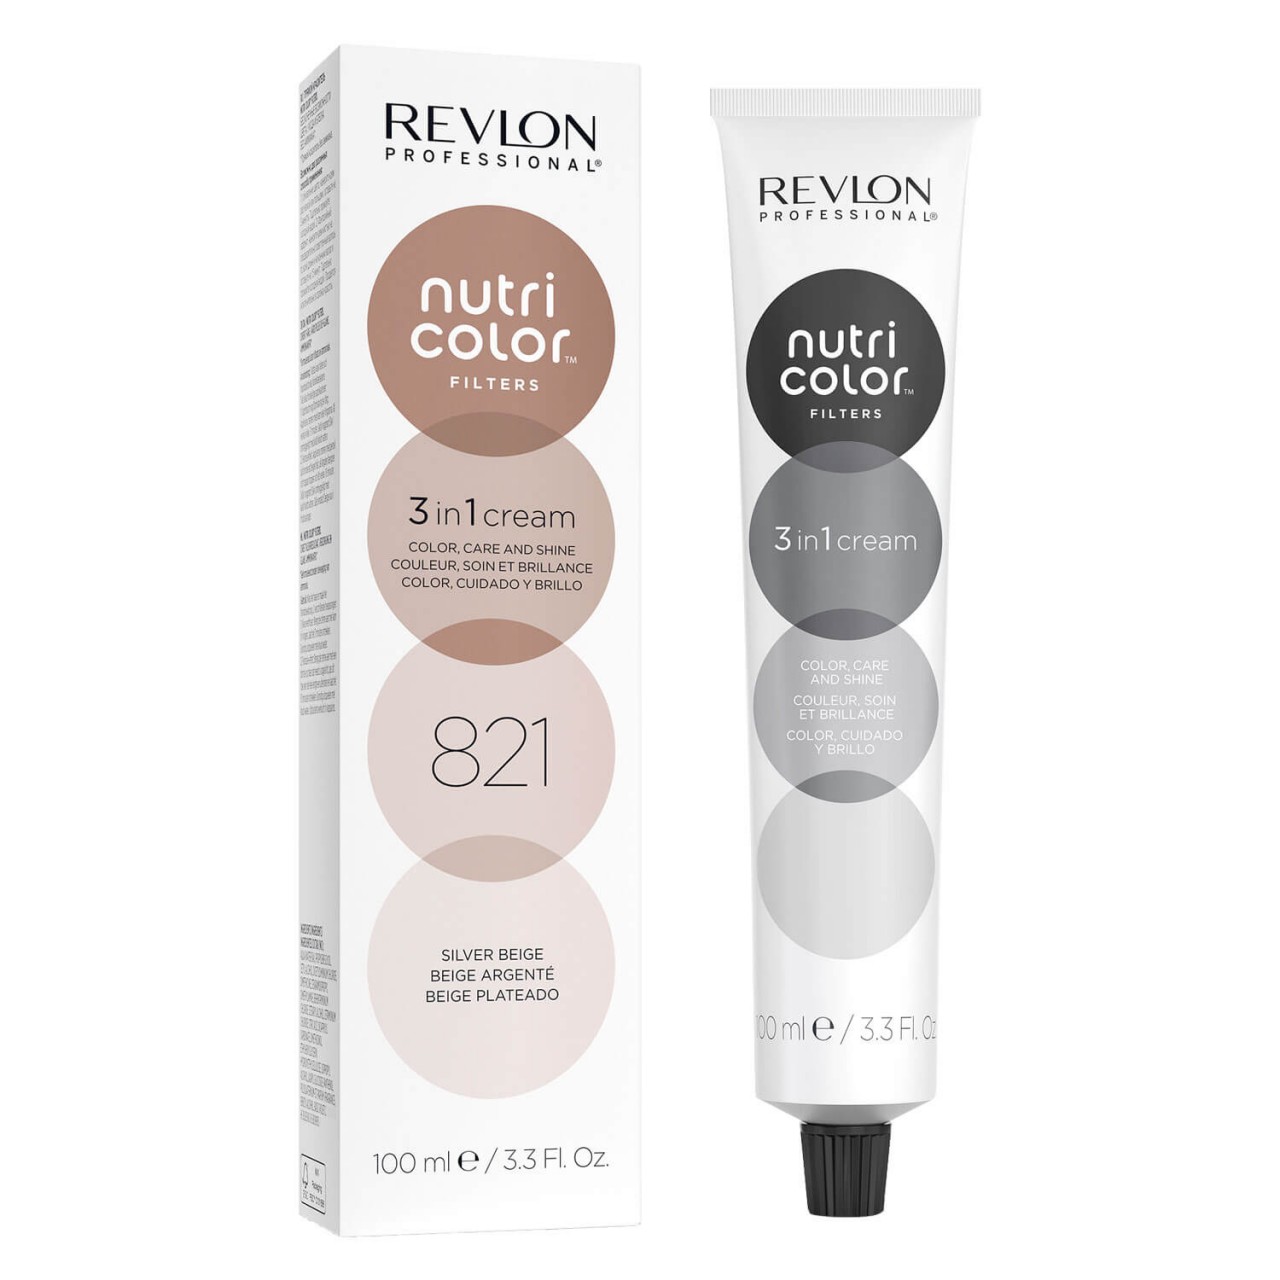 Nutri Color Creme - Silver Beige 821 von Revlon Professional